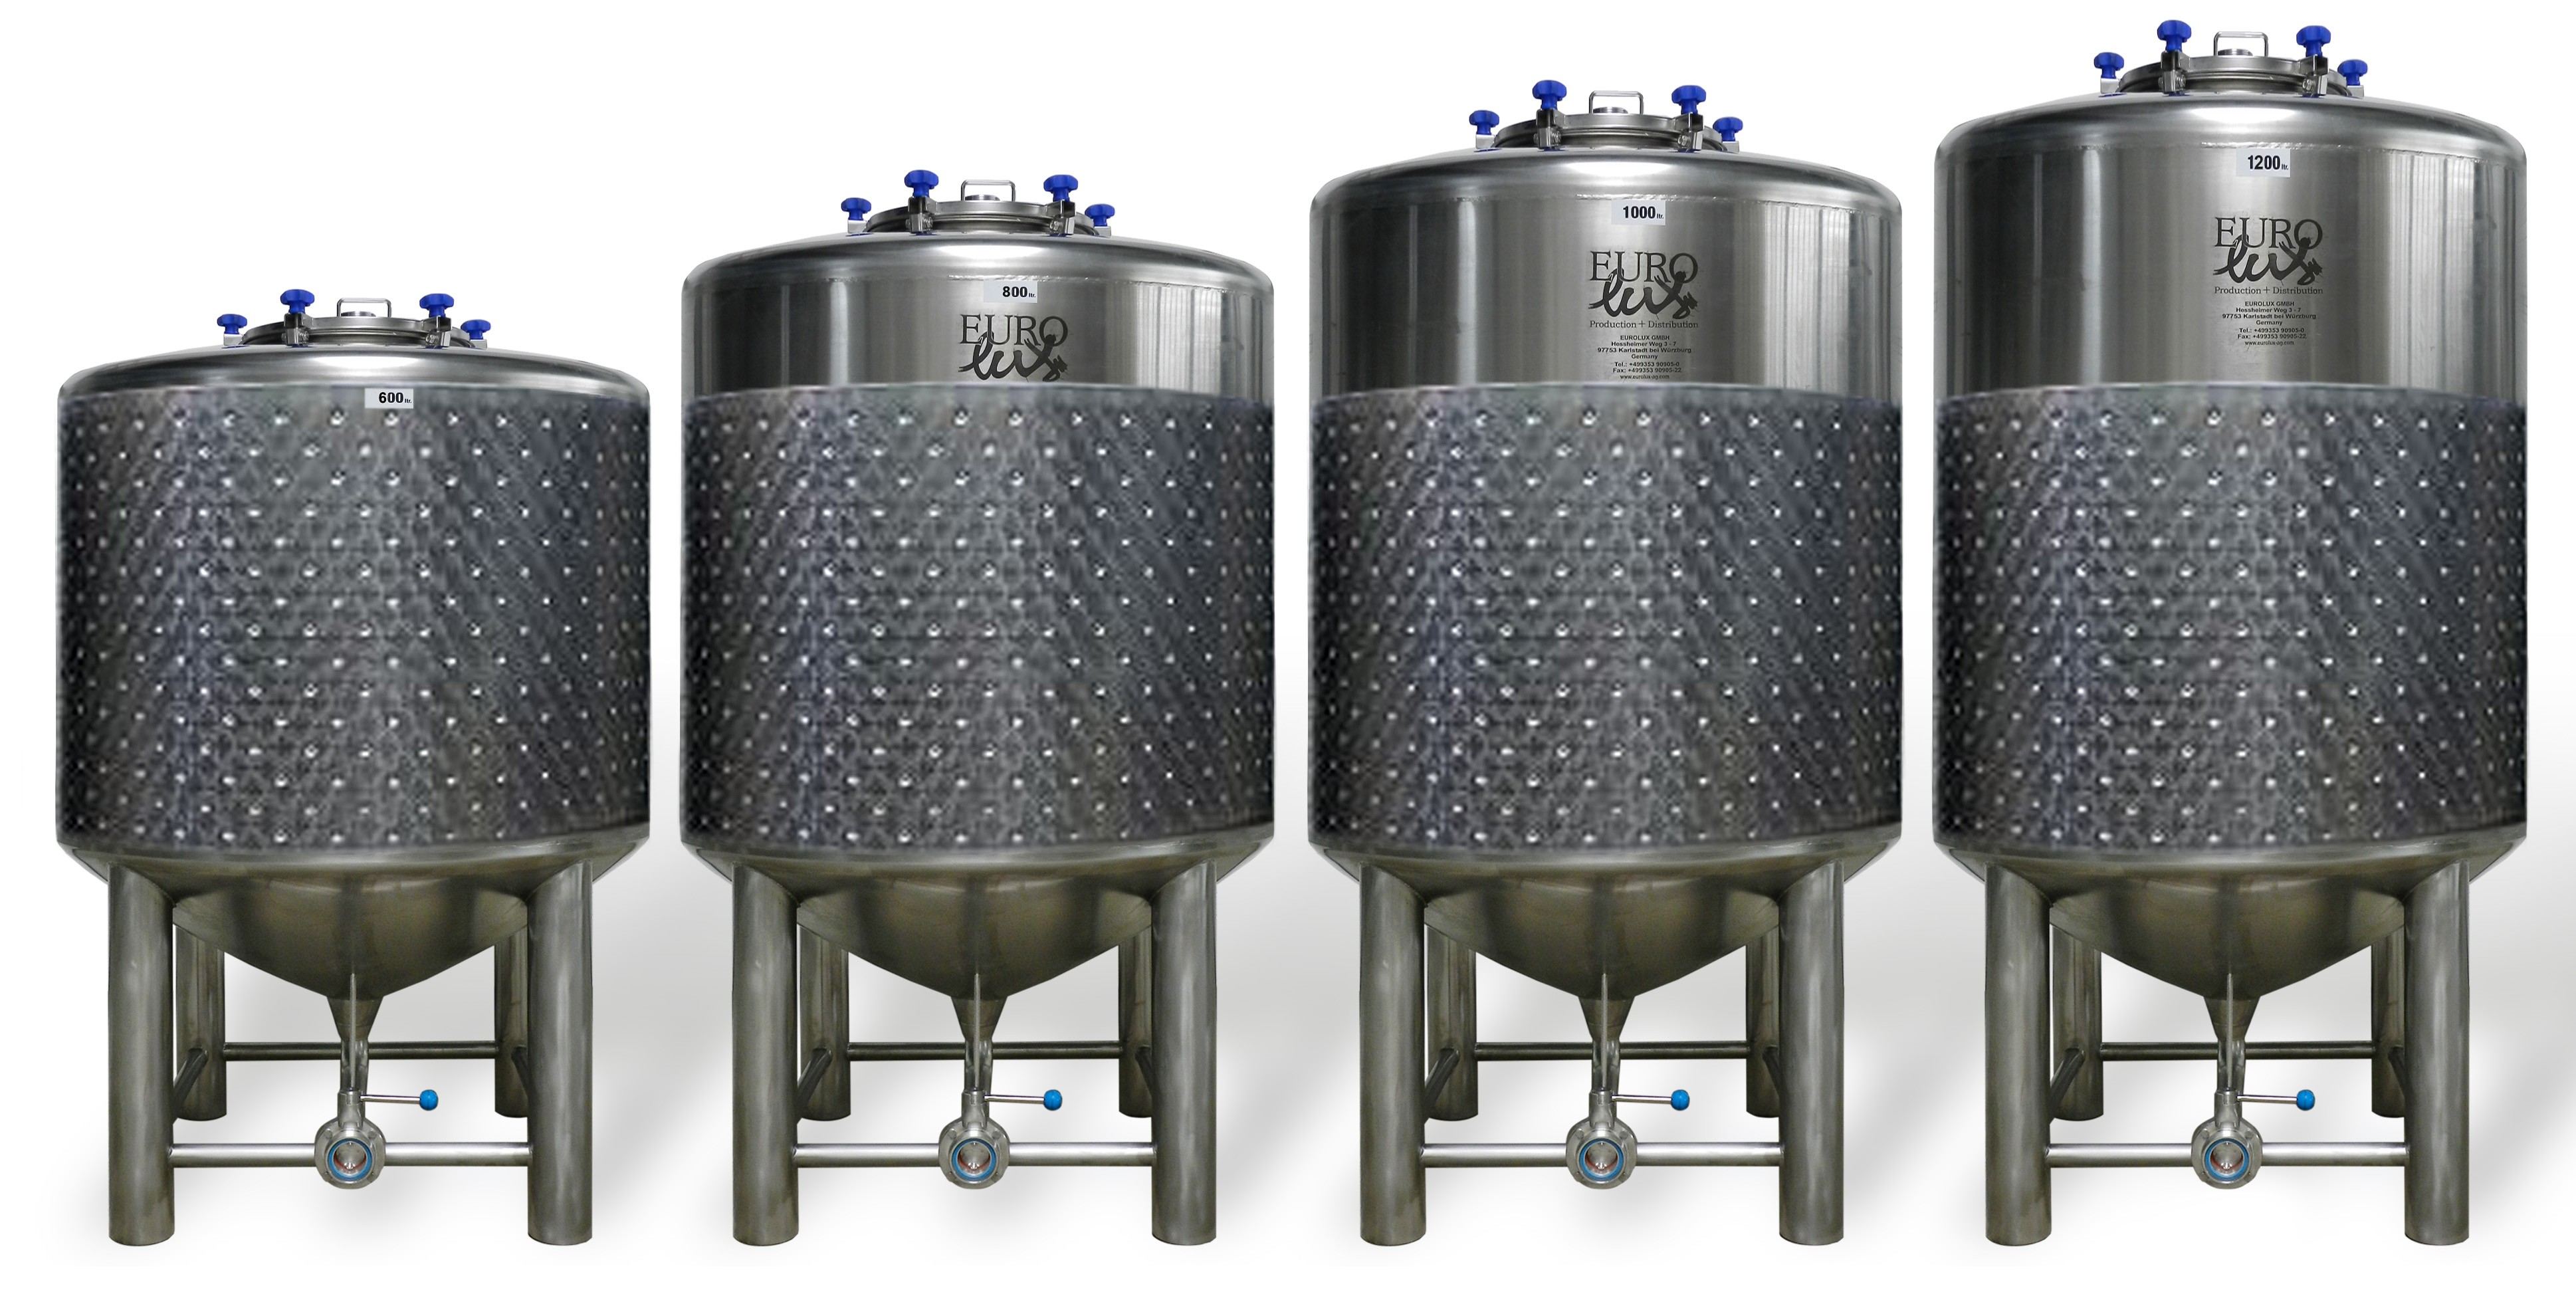 600 litre Eurolux Beer Tanks / Fermentation Tanks/ Pressure Tanks